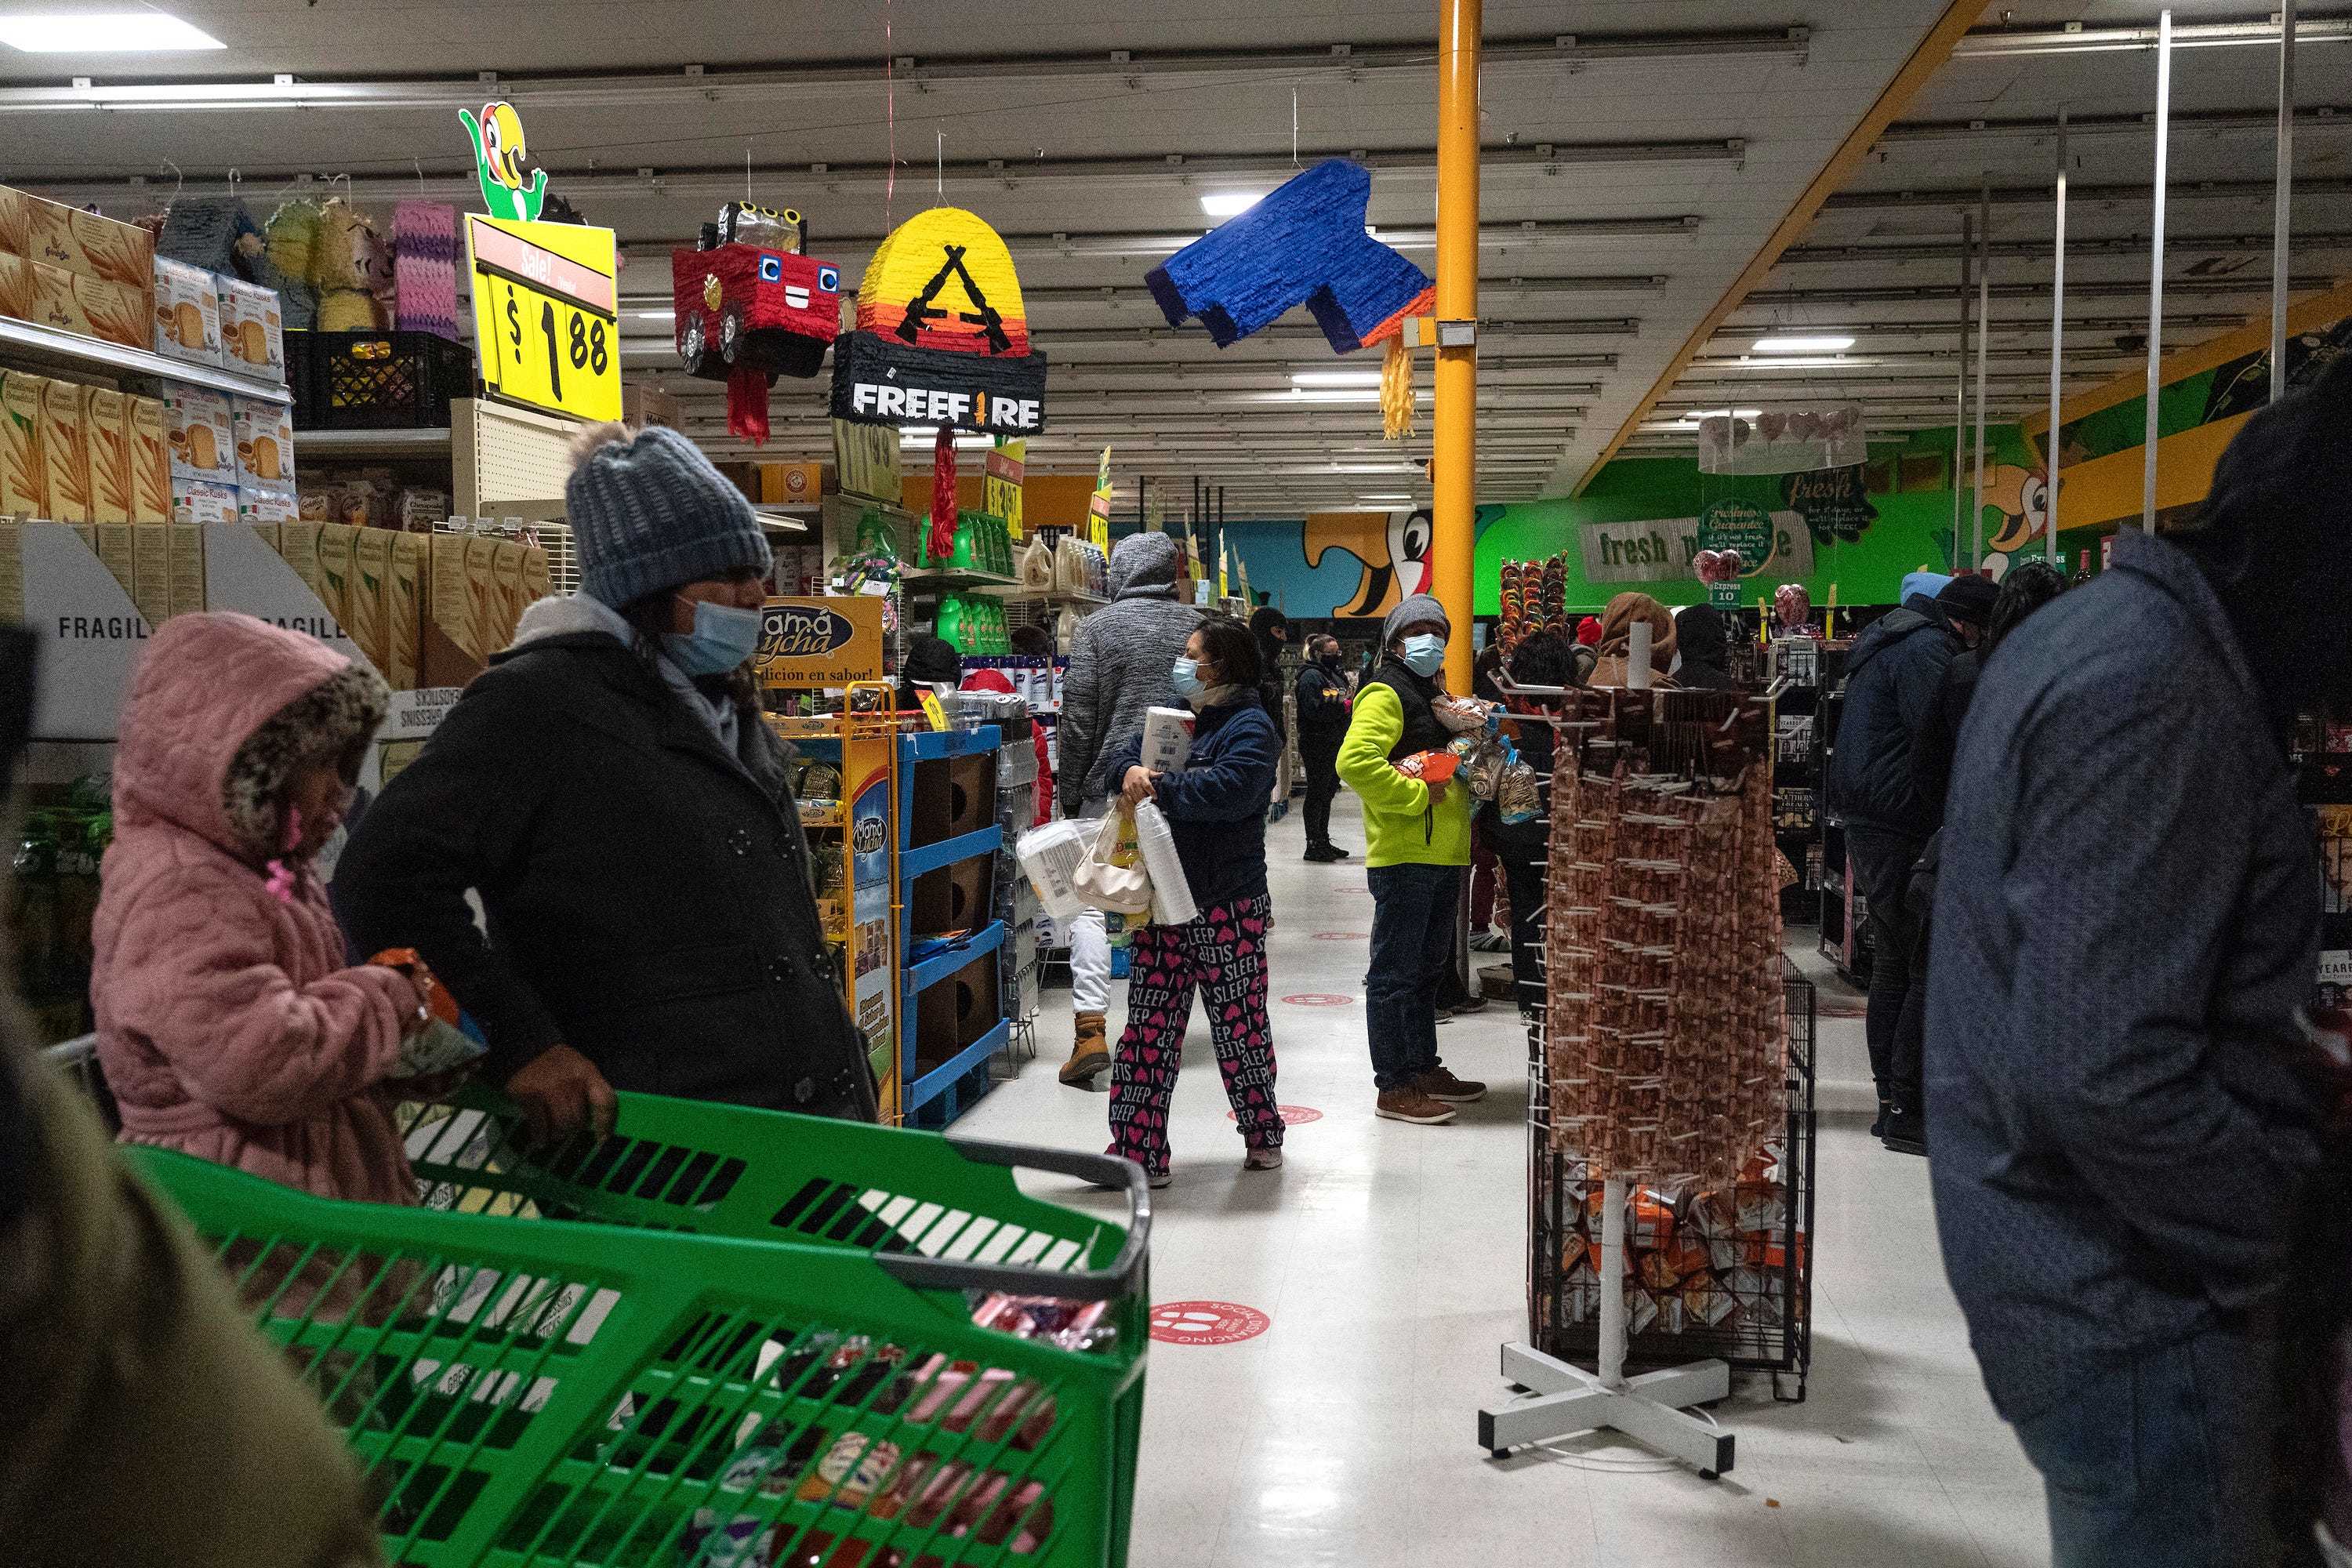 People shop in Fiesta supermarket on February 16, 2021 in Houston, Texas.